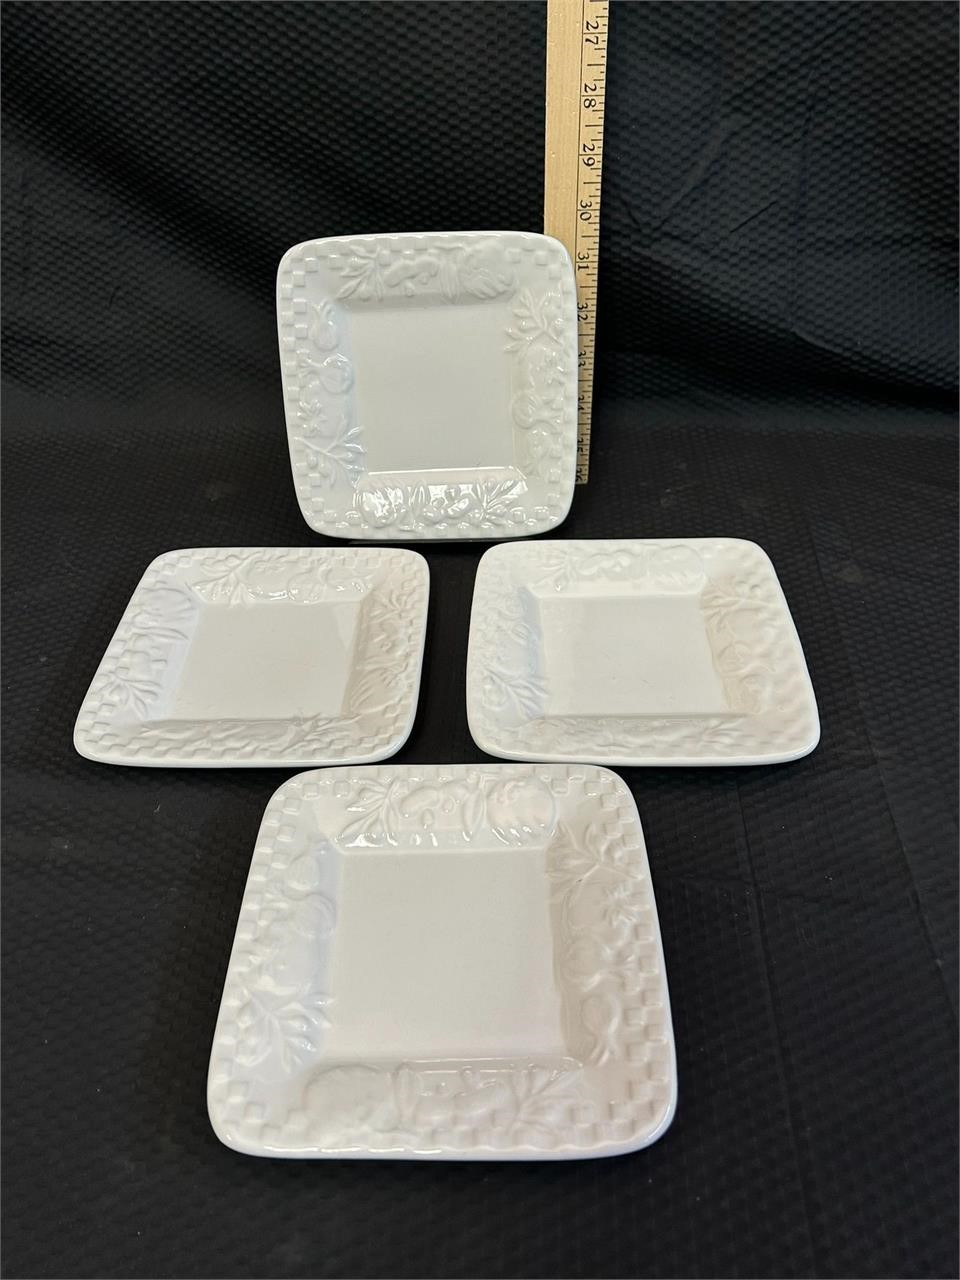 4 Stoneware Dining Plates